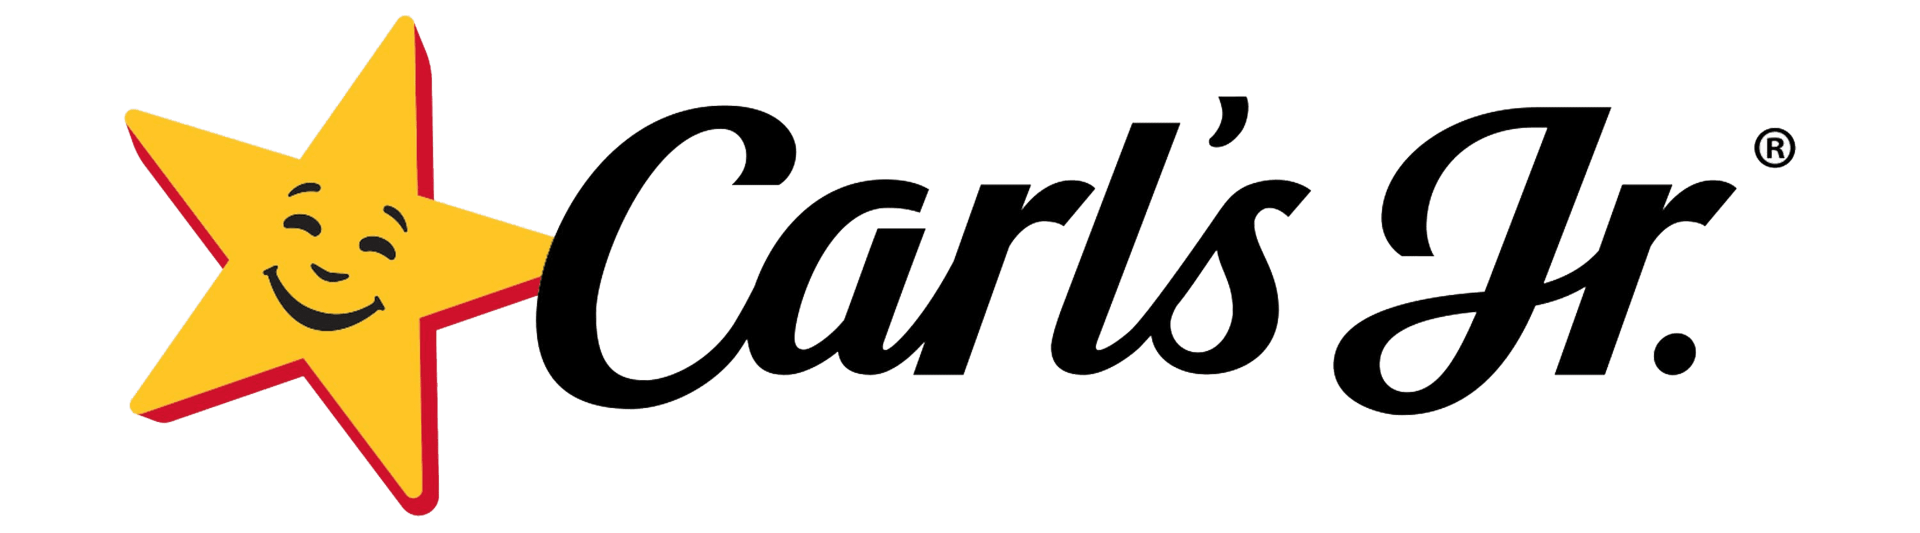 Carls-Jr.-Logo.png